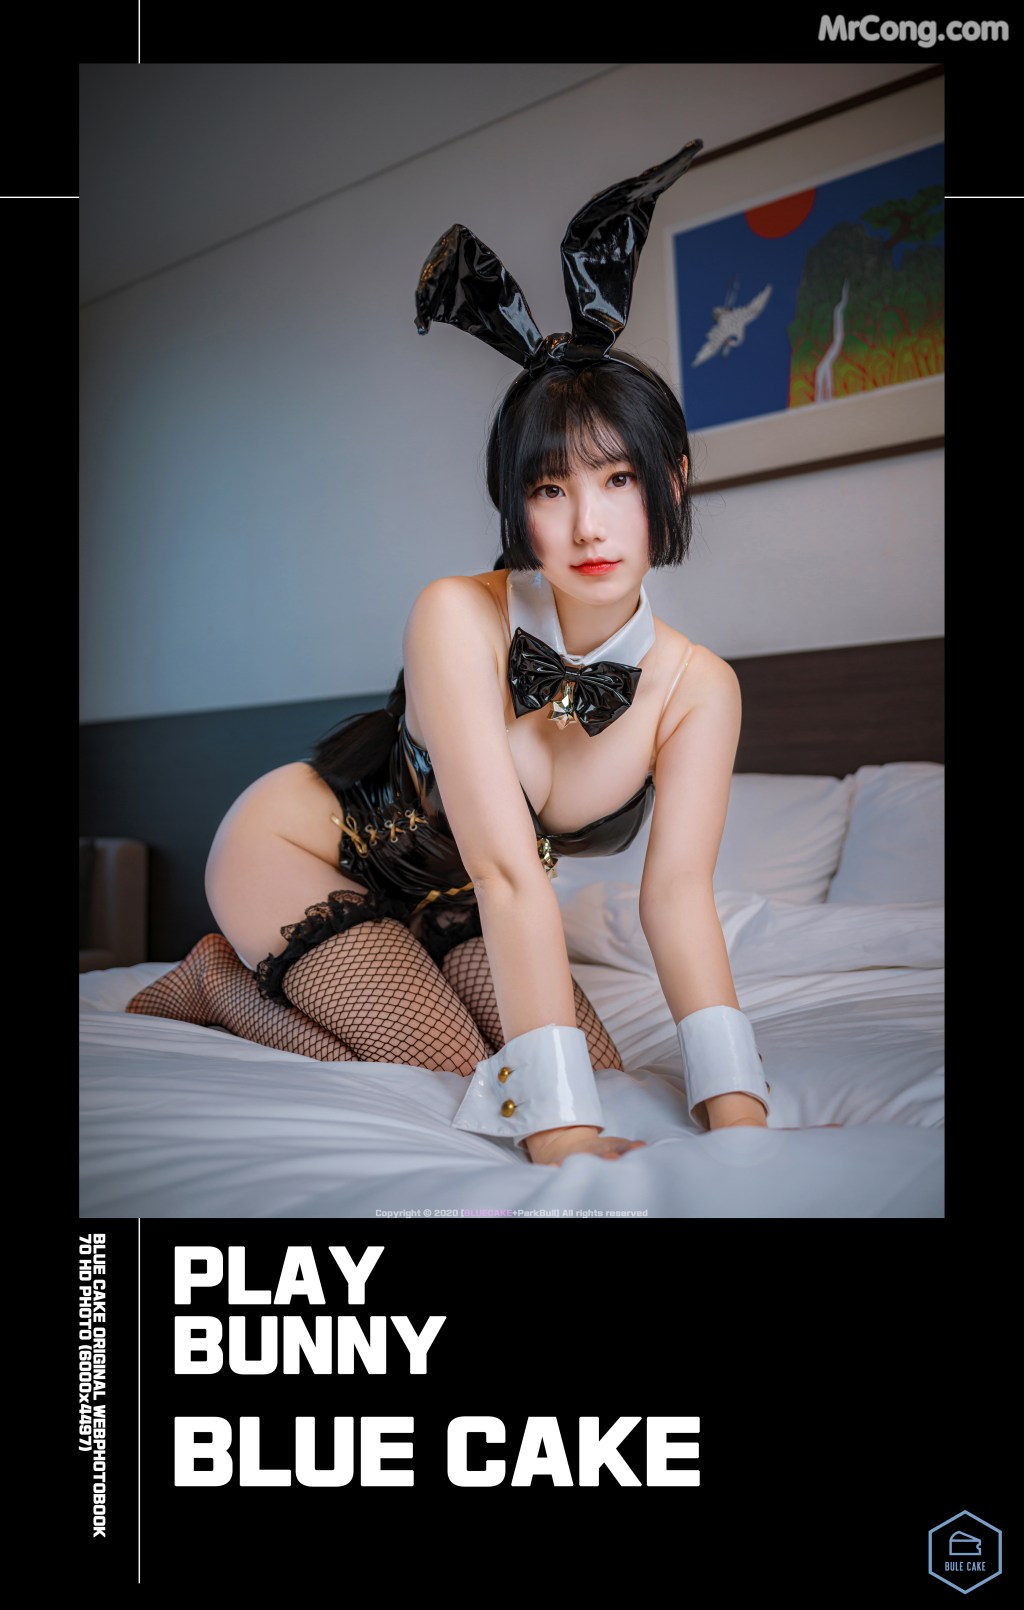 [BLUECAKE] Jamong (자몽): Play Bunny (71 photos)